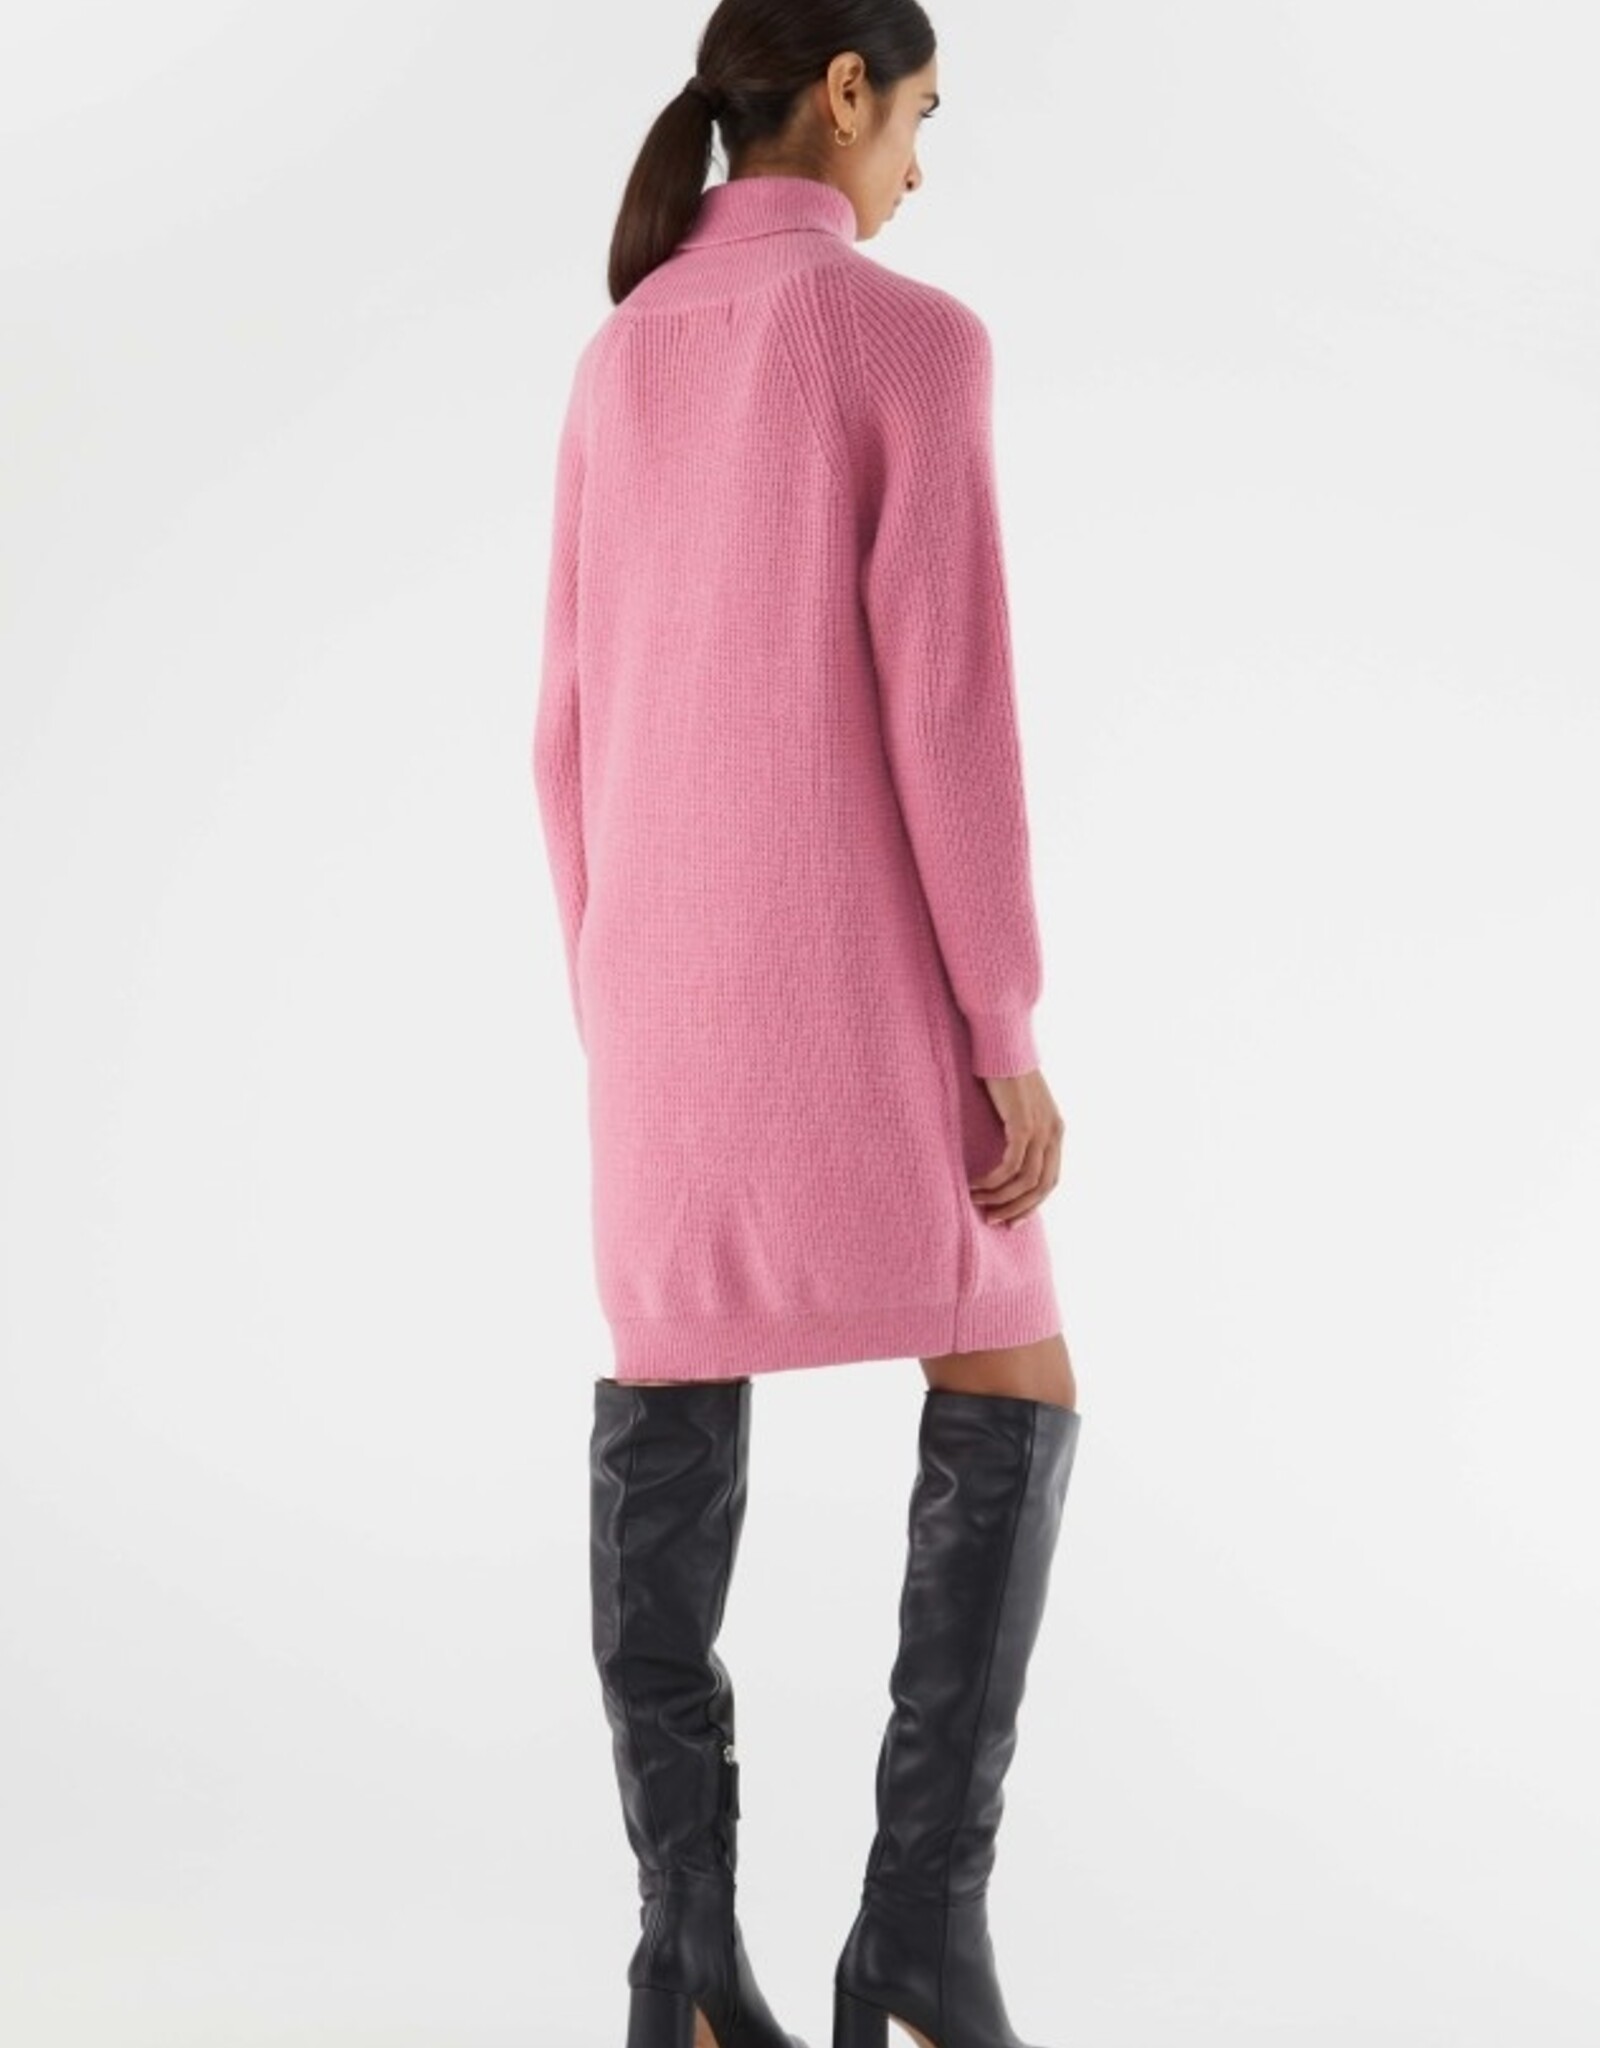 Compania Fantastica MockNk Sweater Dress